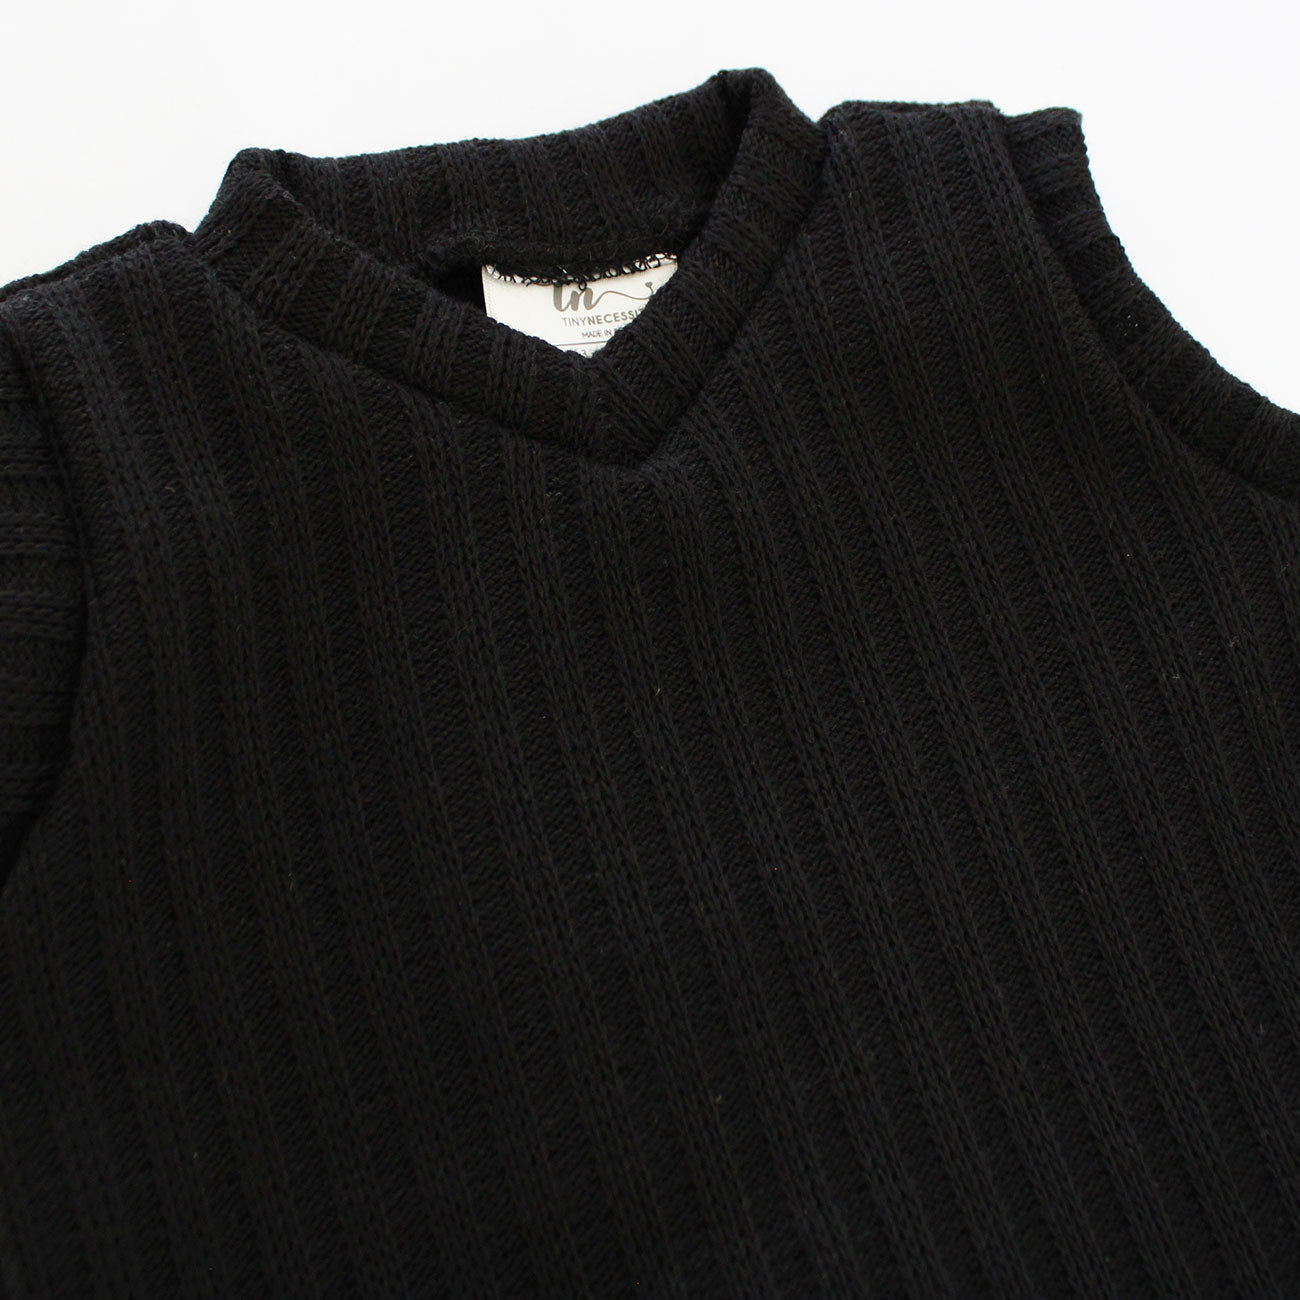 Sleeveless Knit Jersey - Black